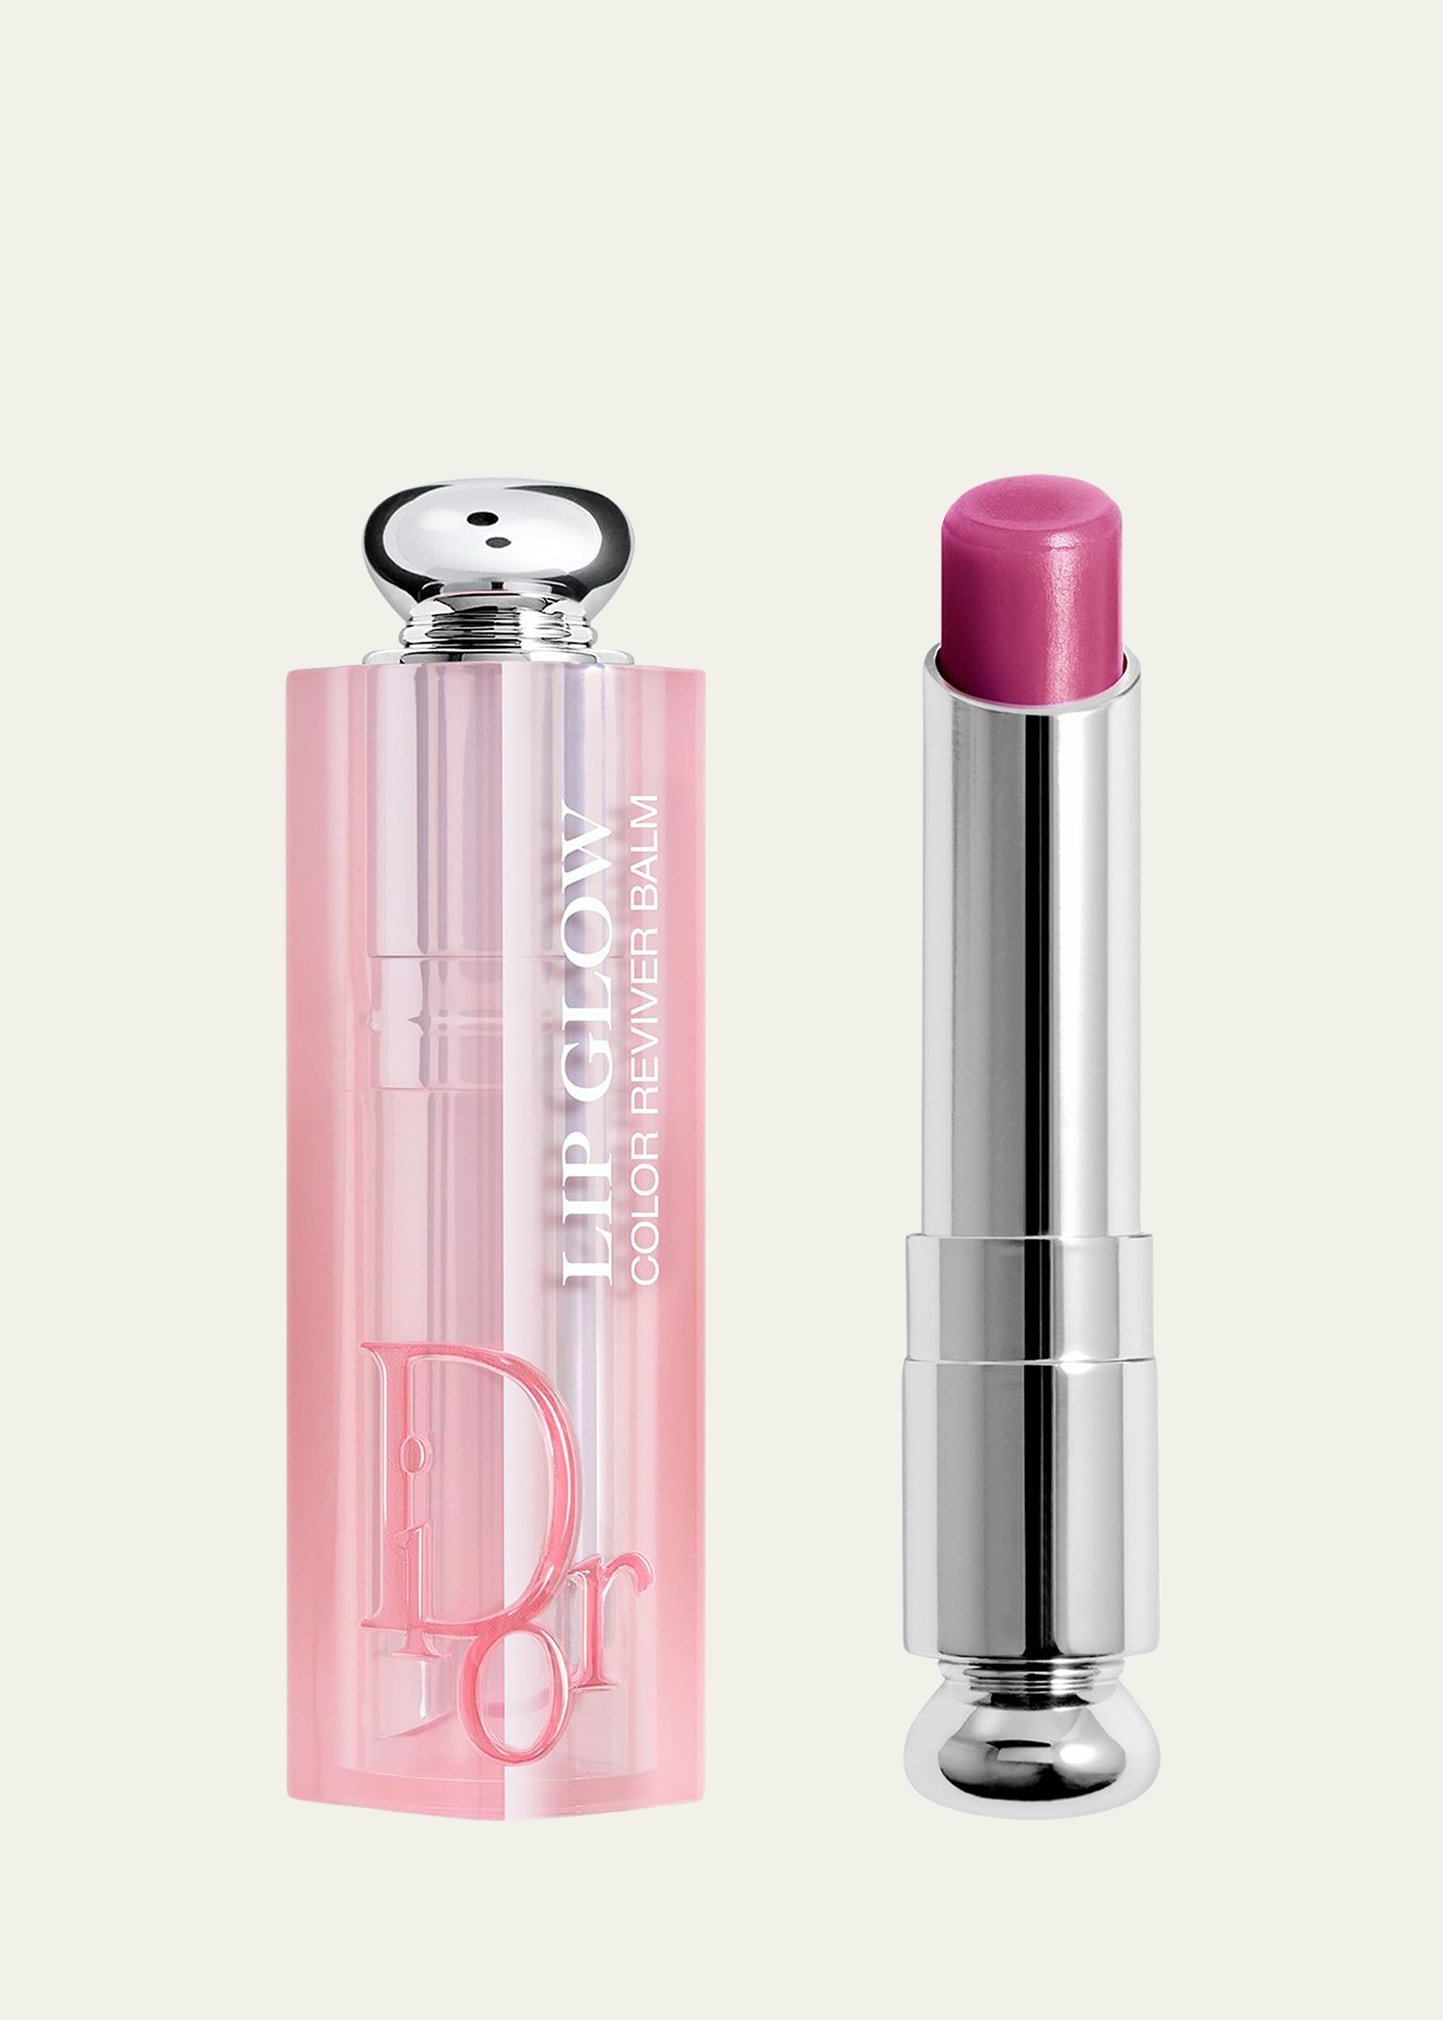 Dior Addict Lip Glow Balm In 006 Berry